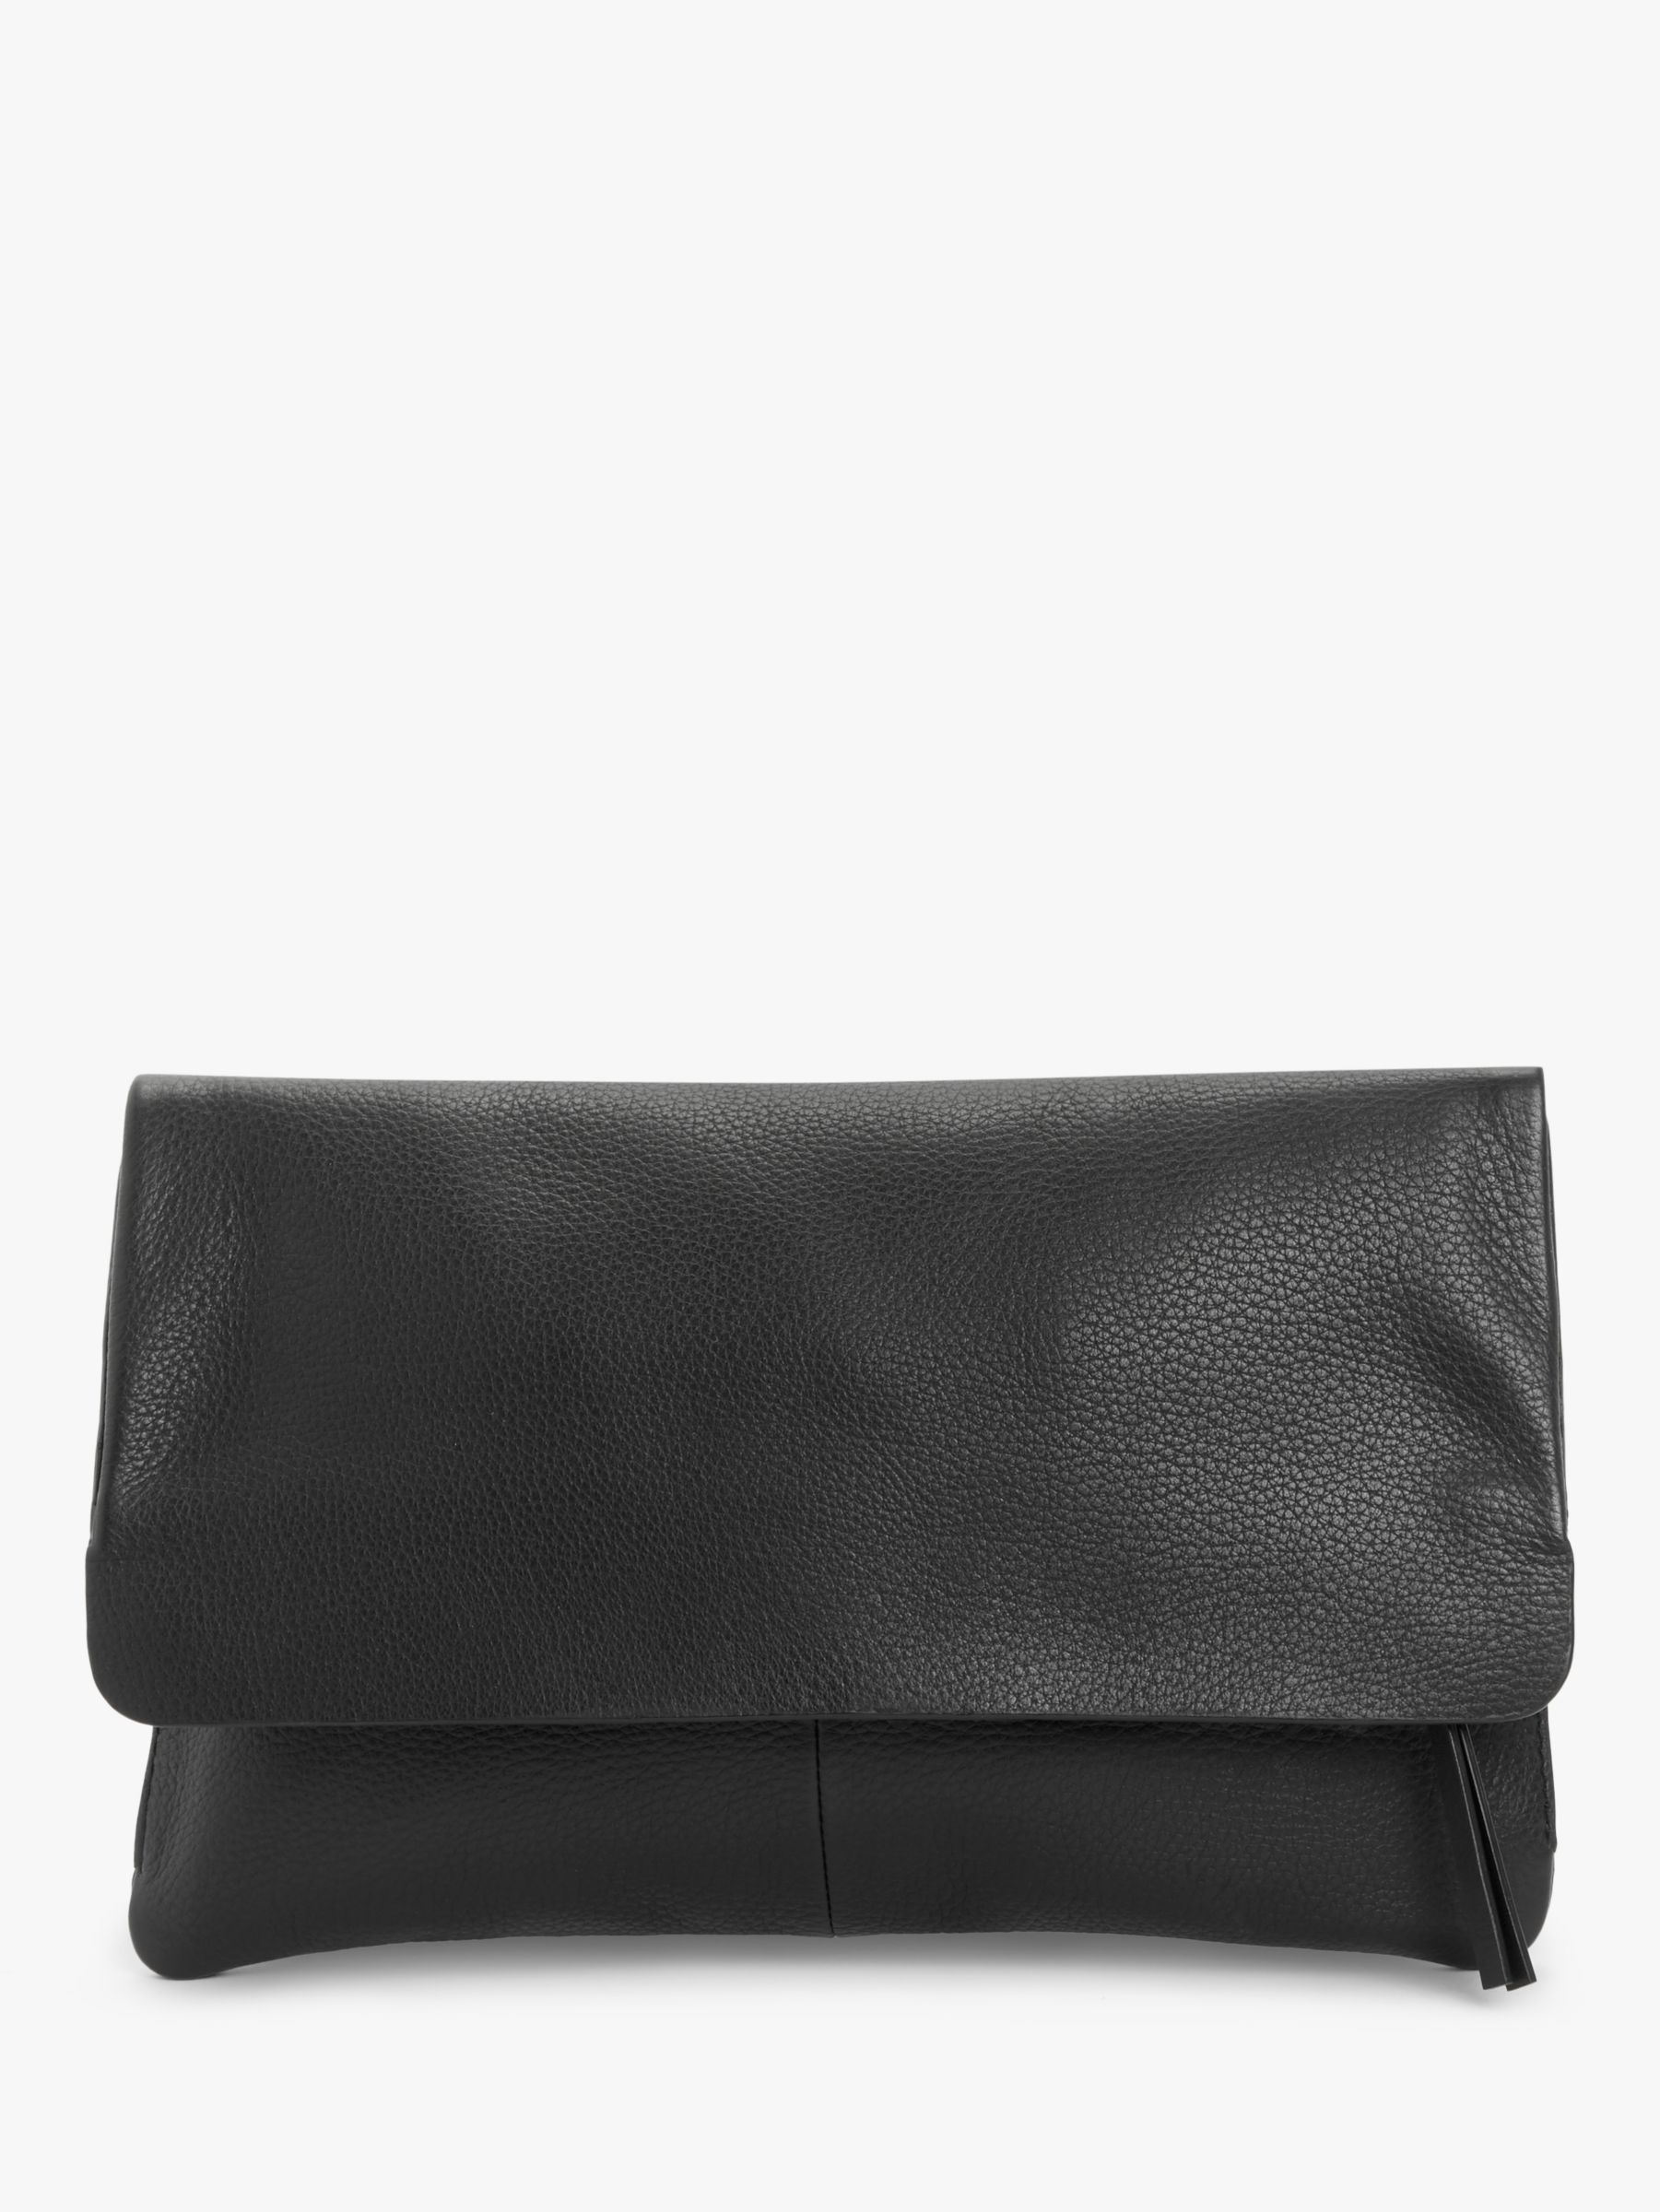 black clutch bag uk